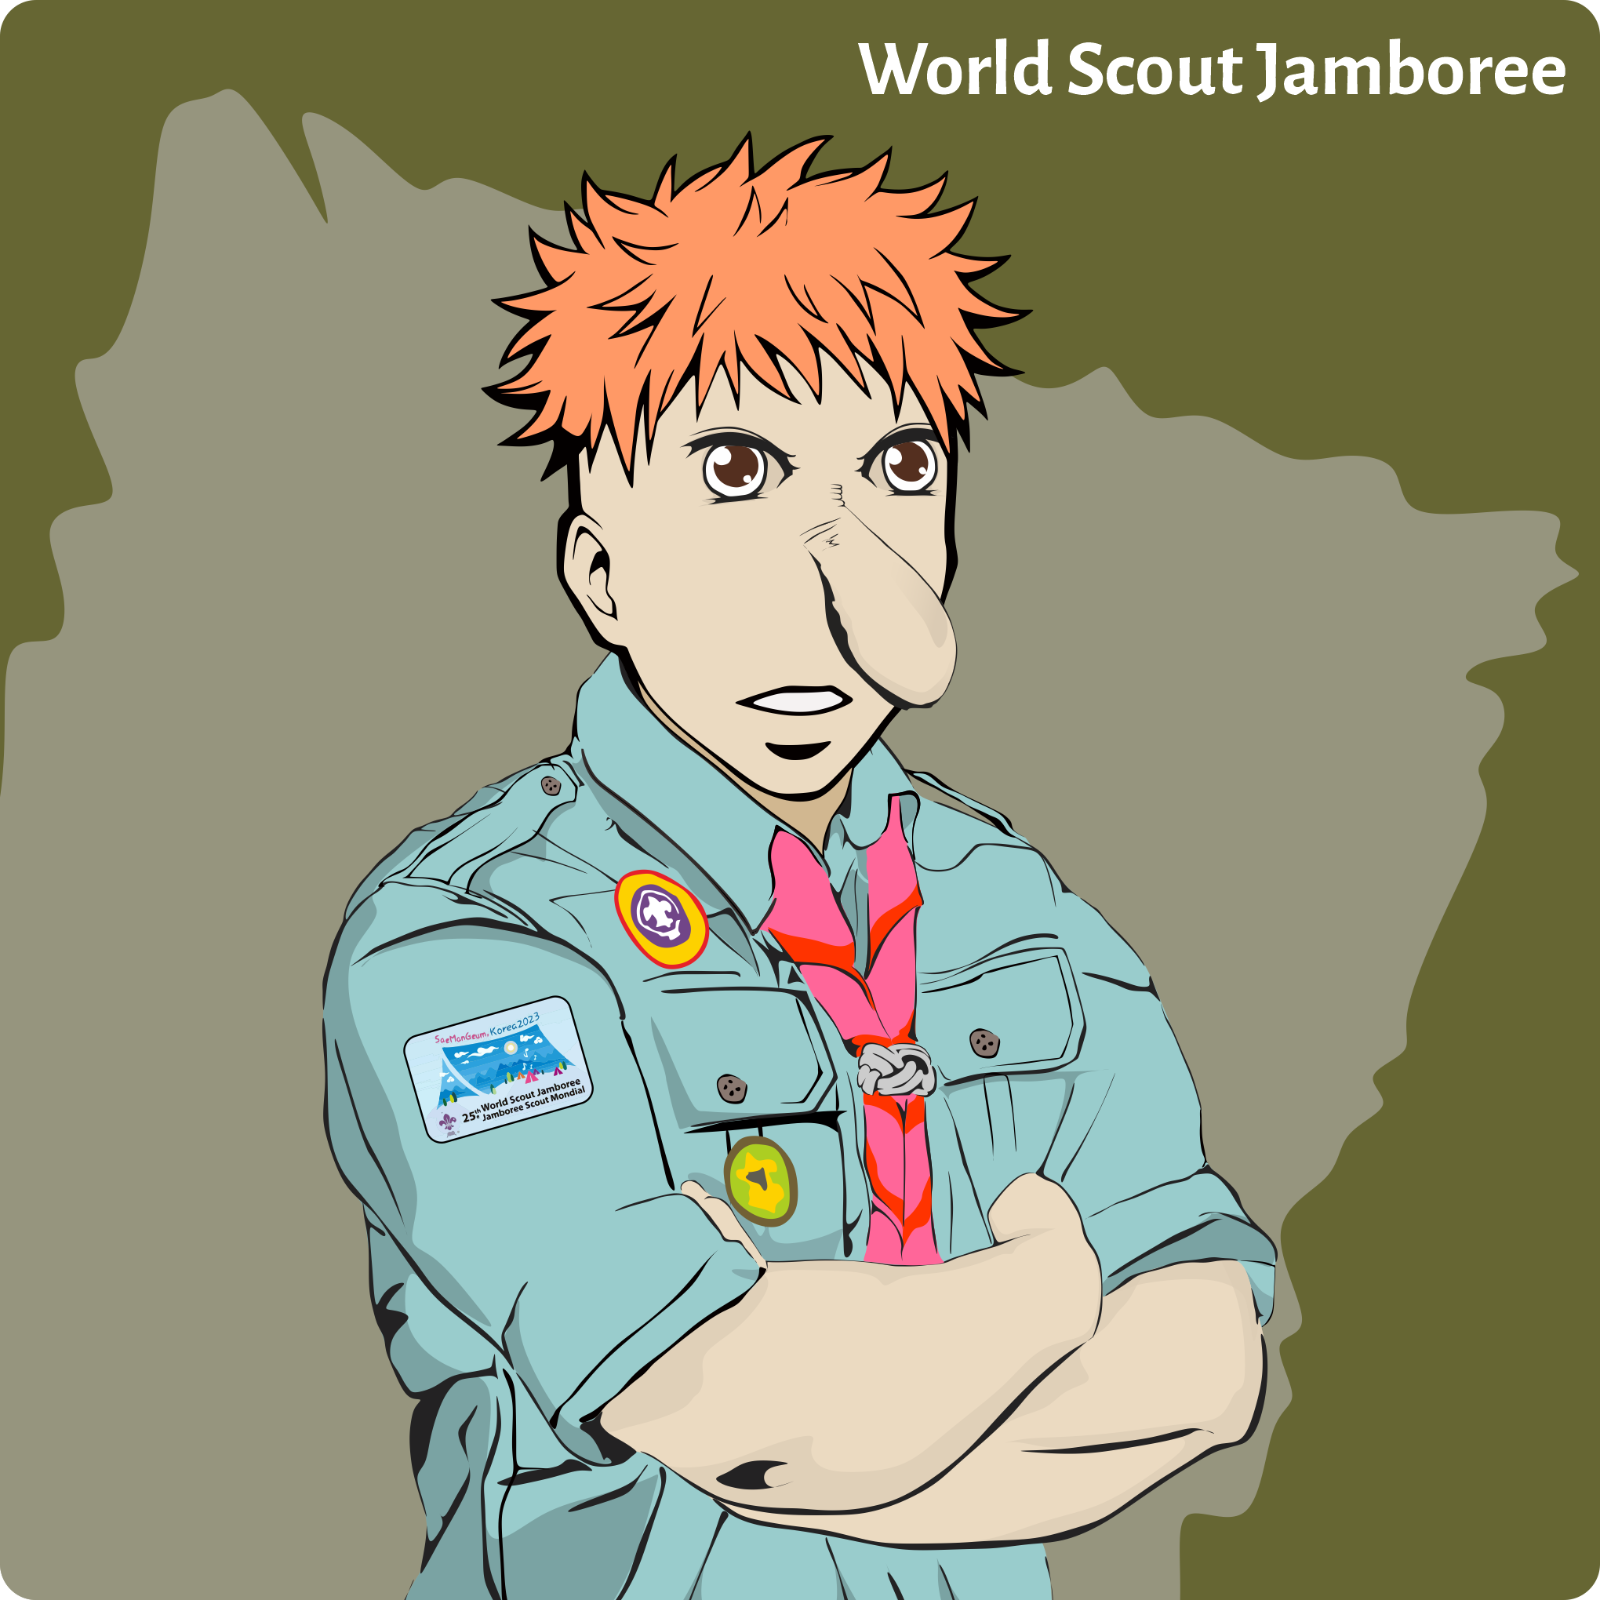 Road to World Scout Jamboree